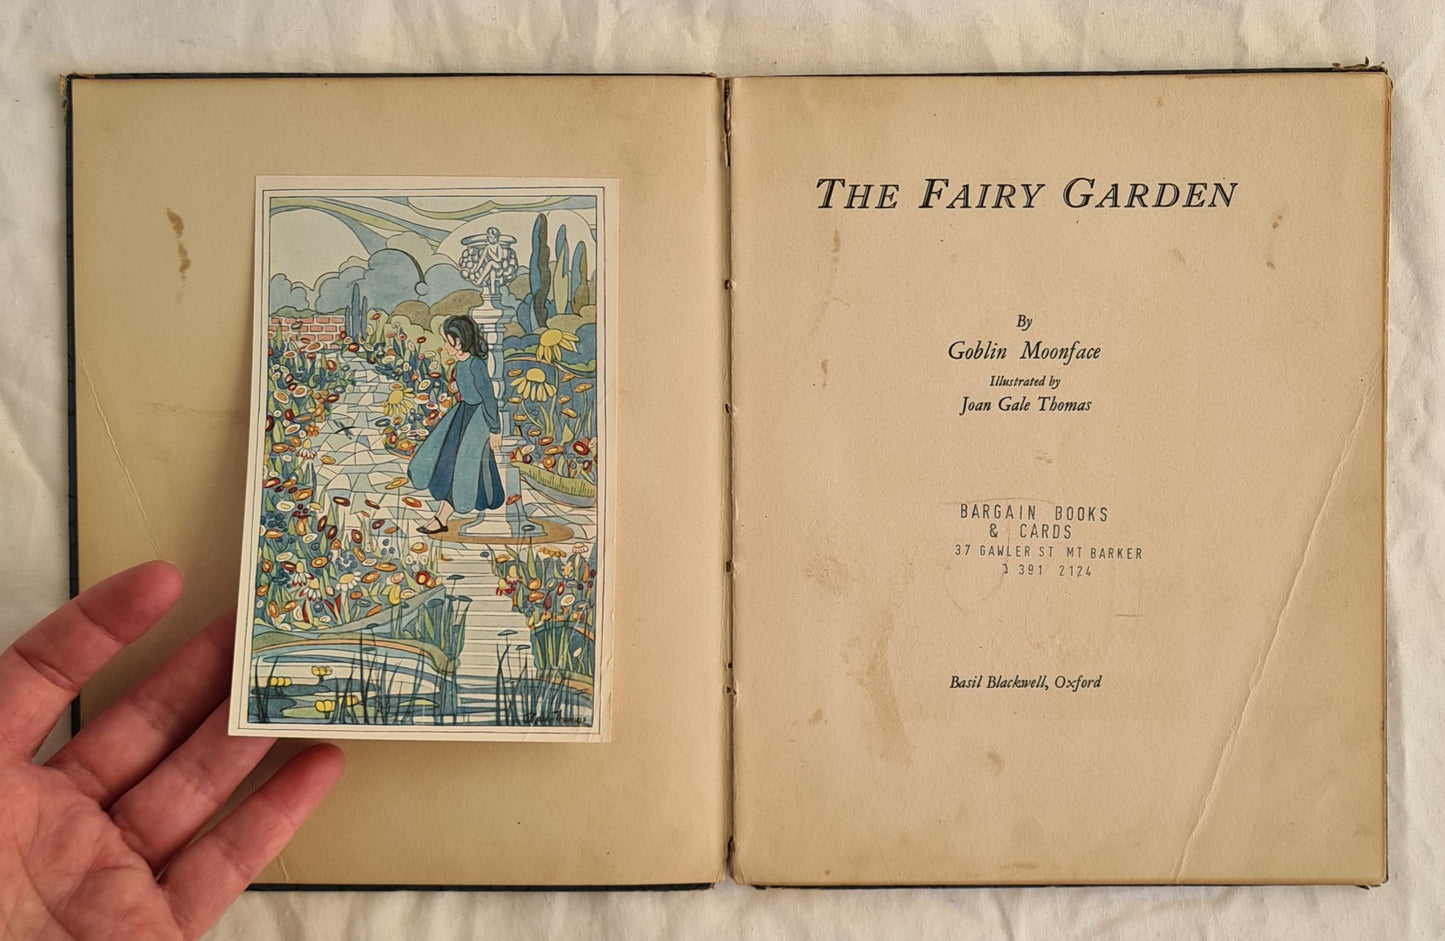 The Fairy Garden by Goblin Moonface